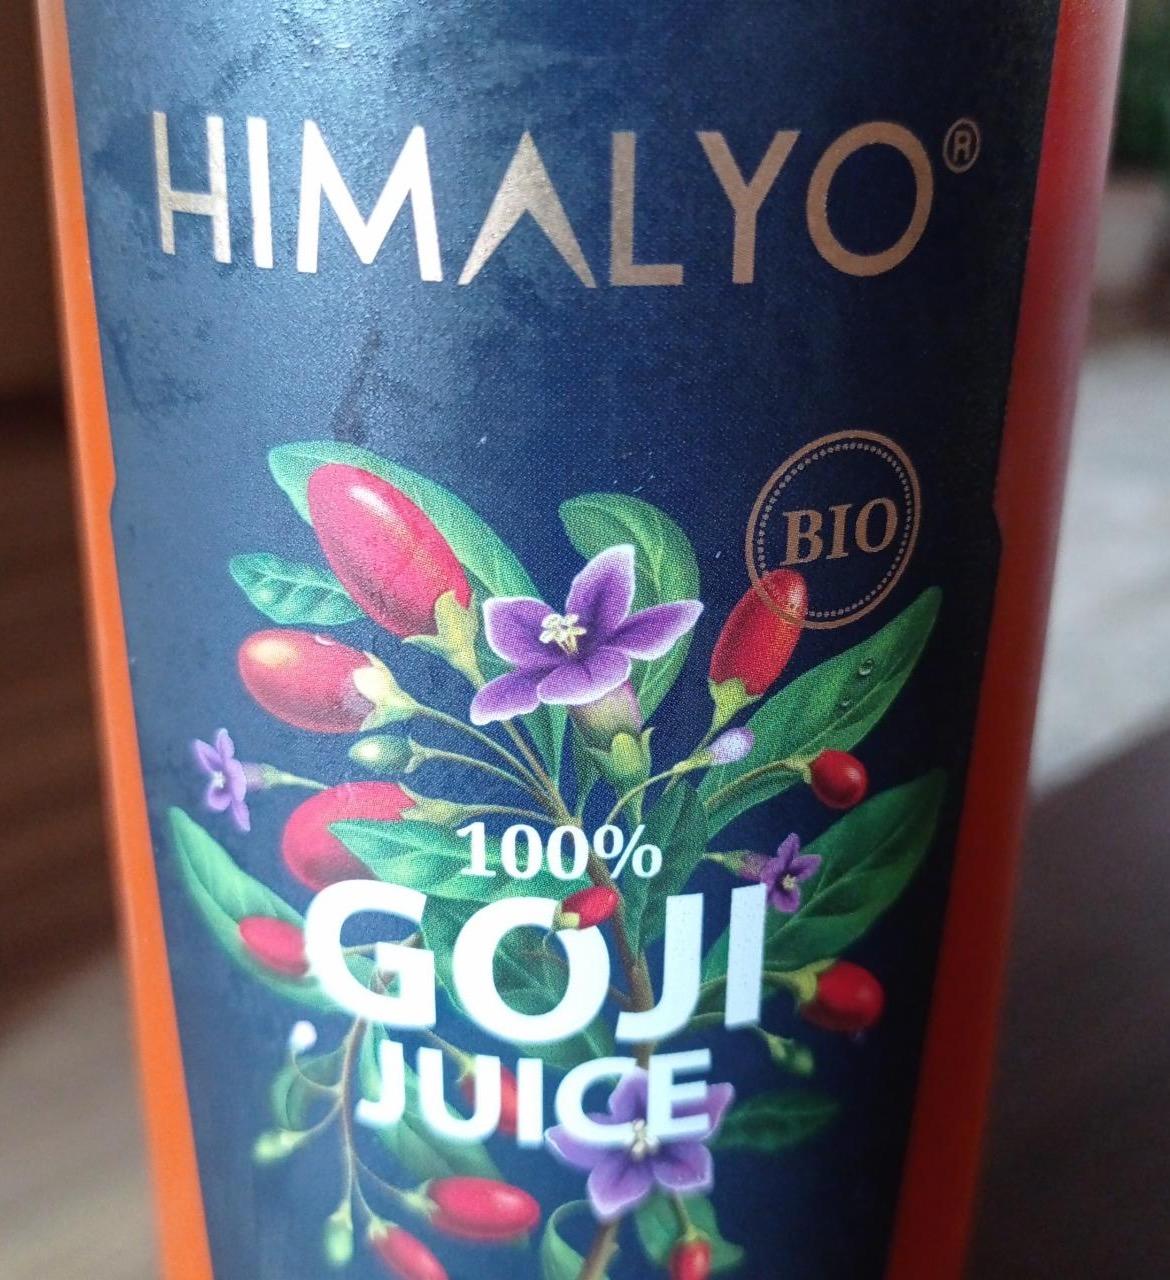 Képek - Gojilé 100% goji juice Himalyo